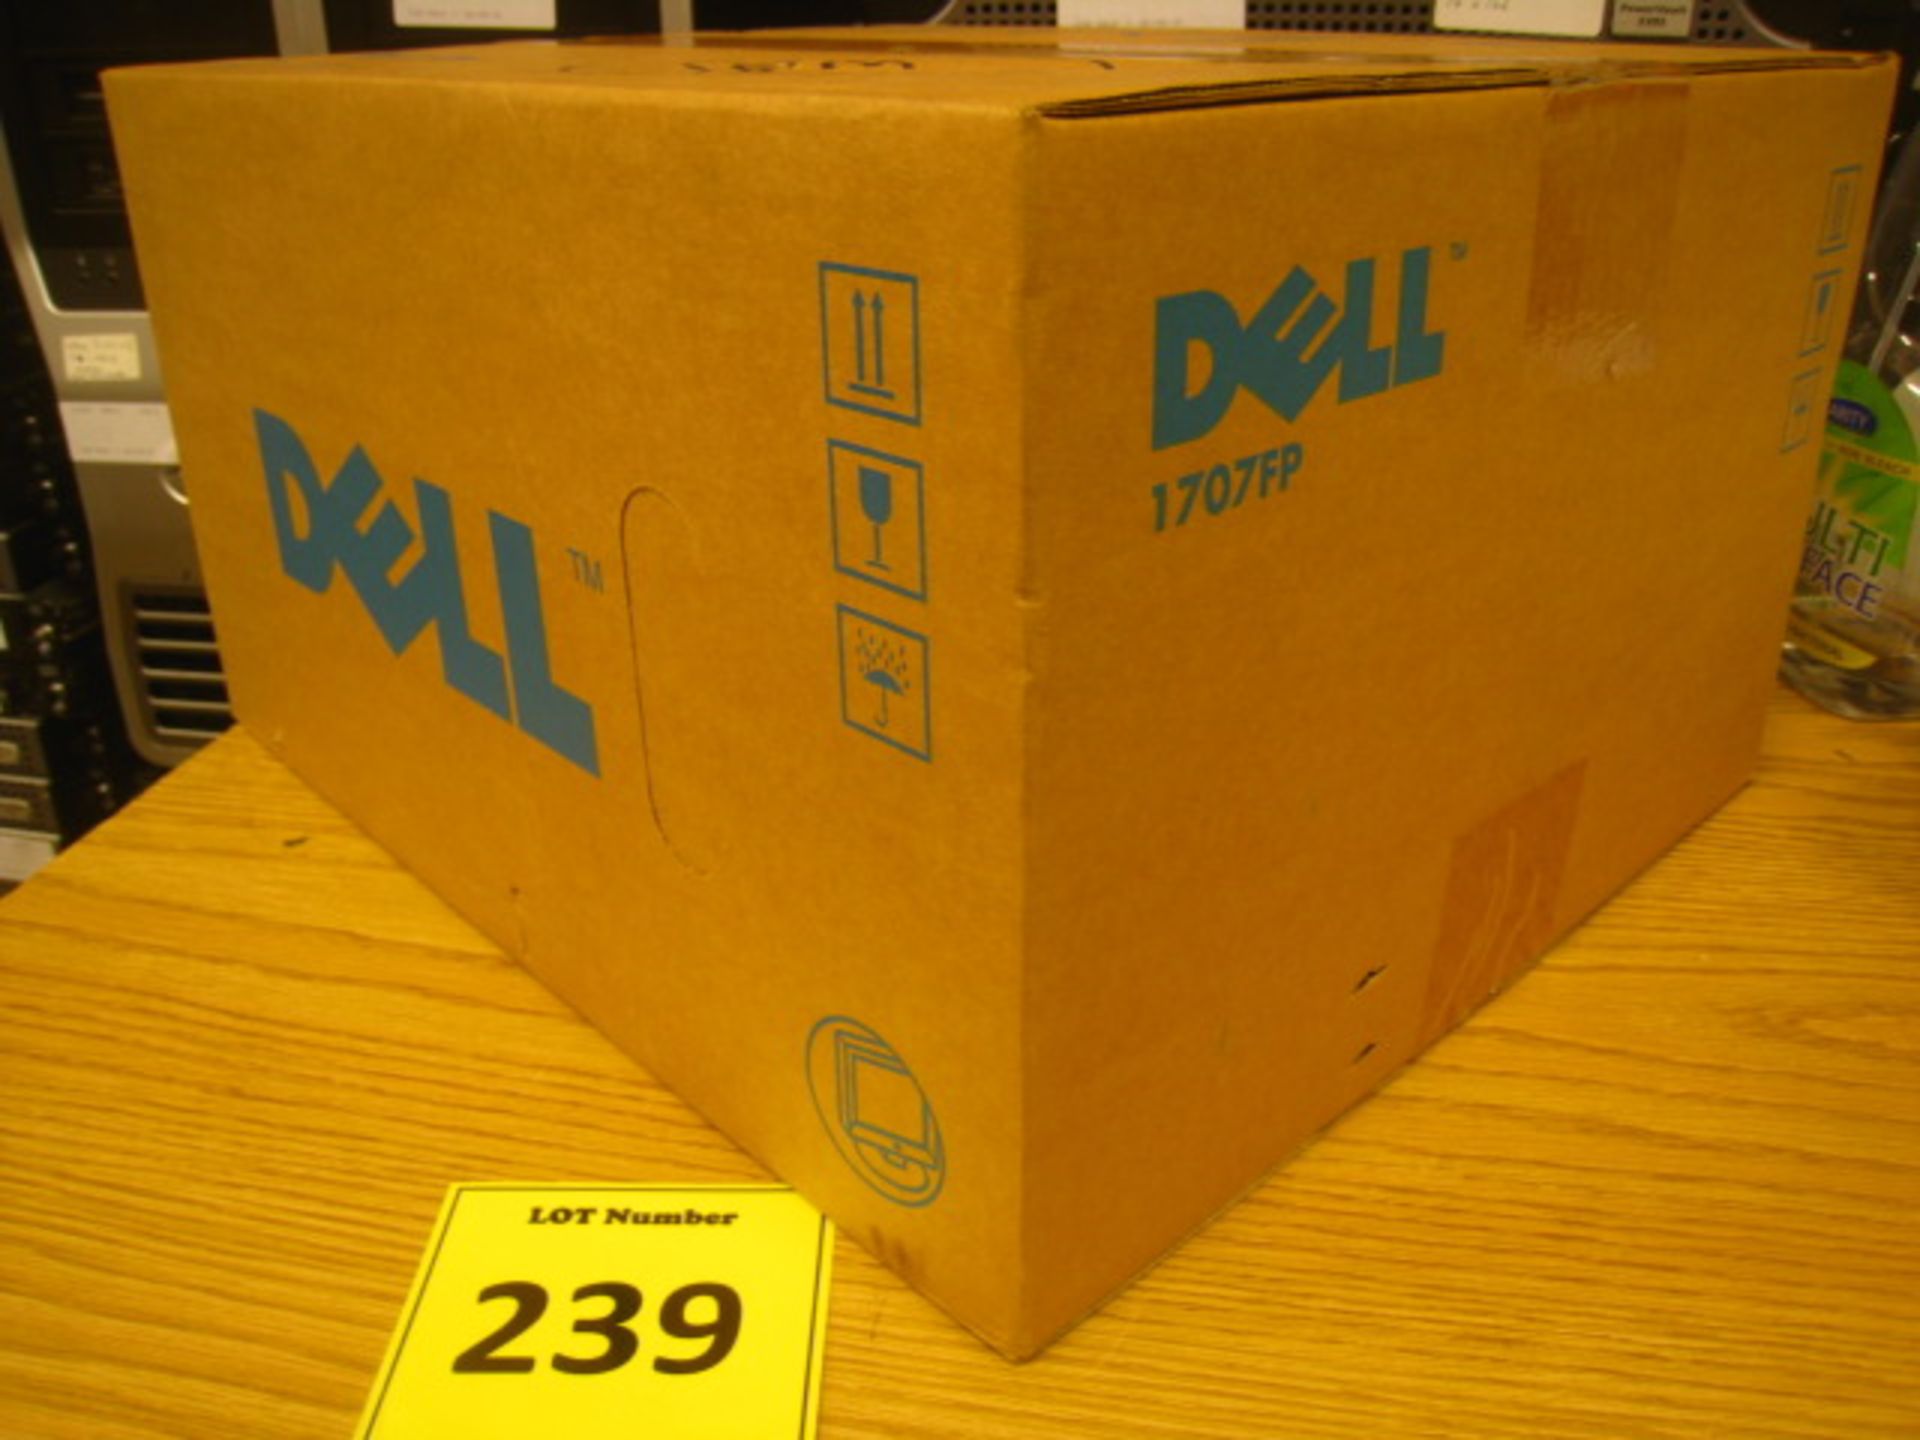 New & Boxed Dell 1707 LCD MONITOR